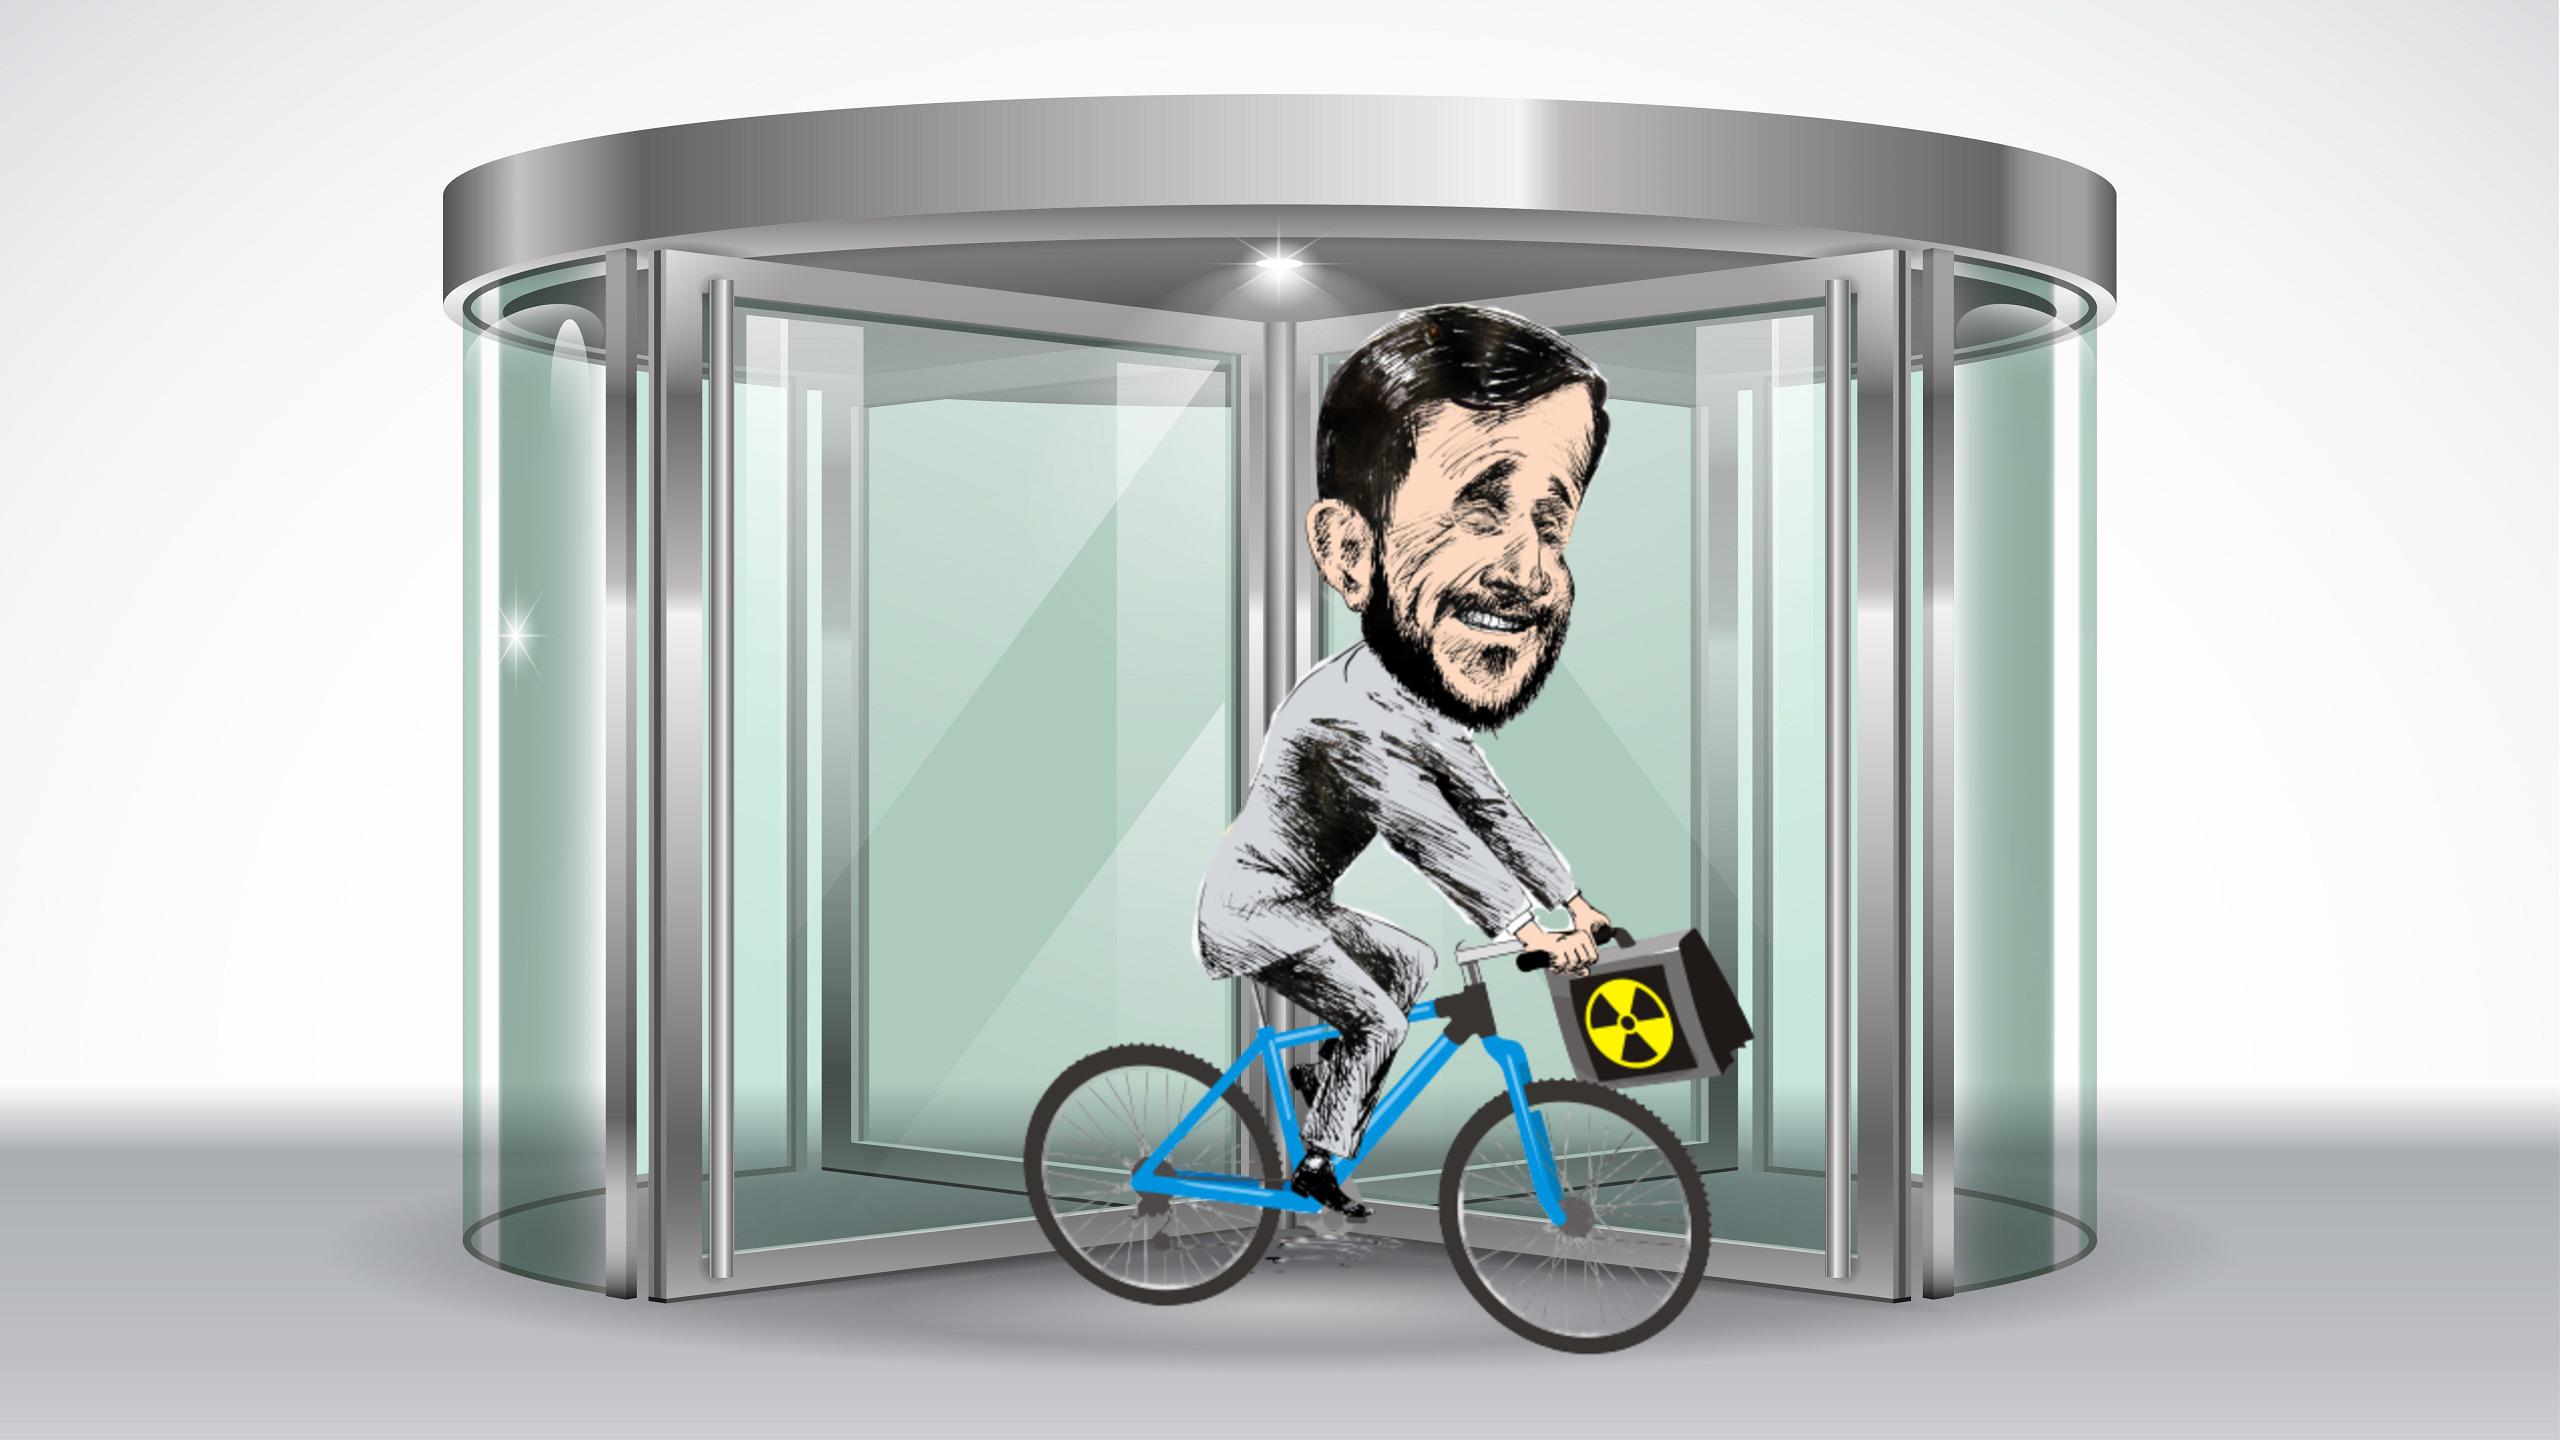 He’s Back! Iran’s Former President Ahmadinejad Files To Run Again